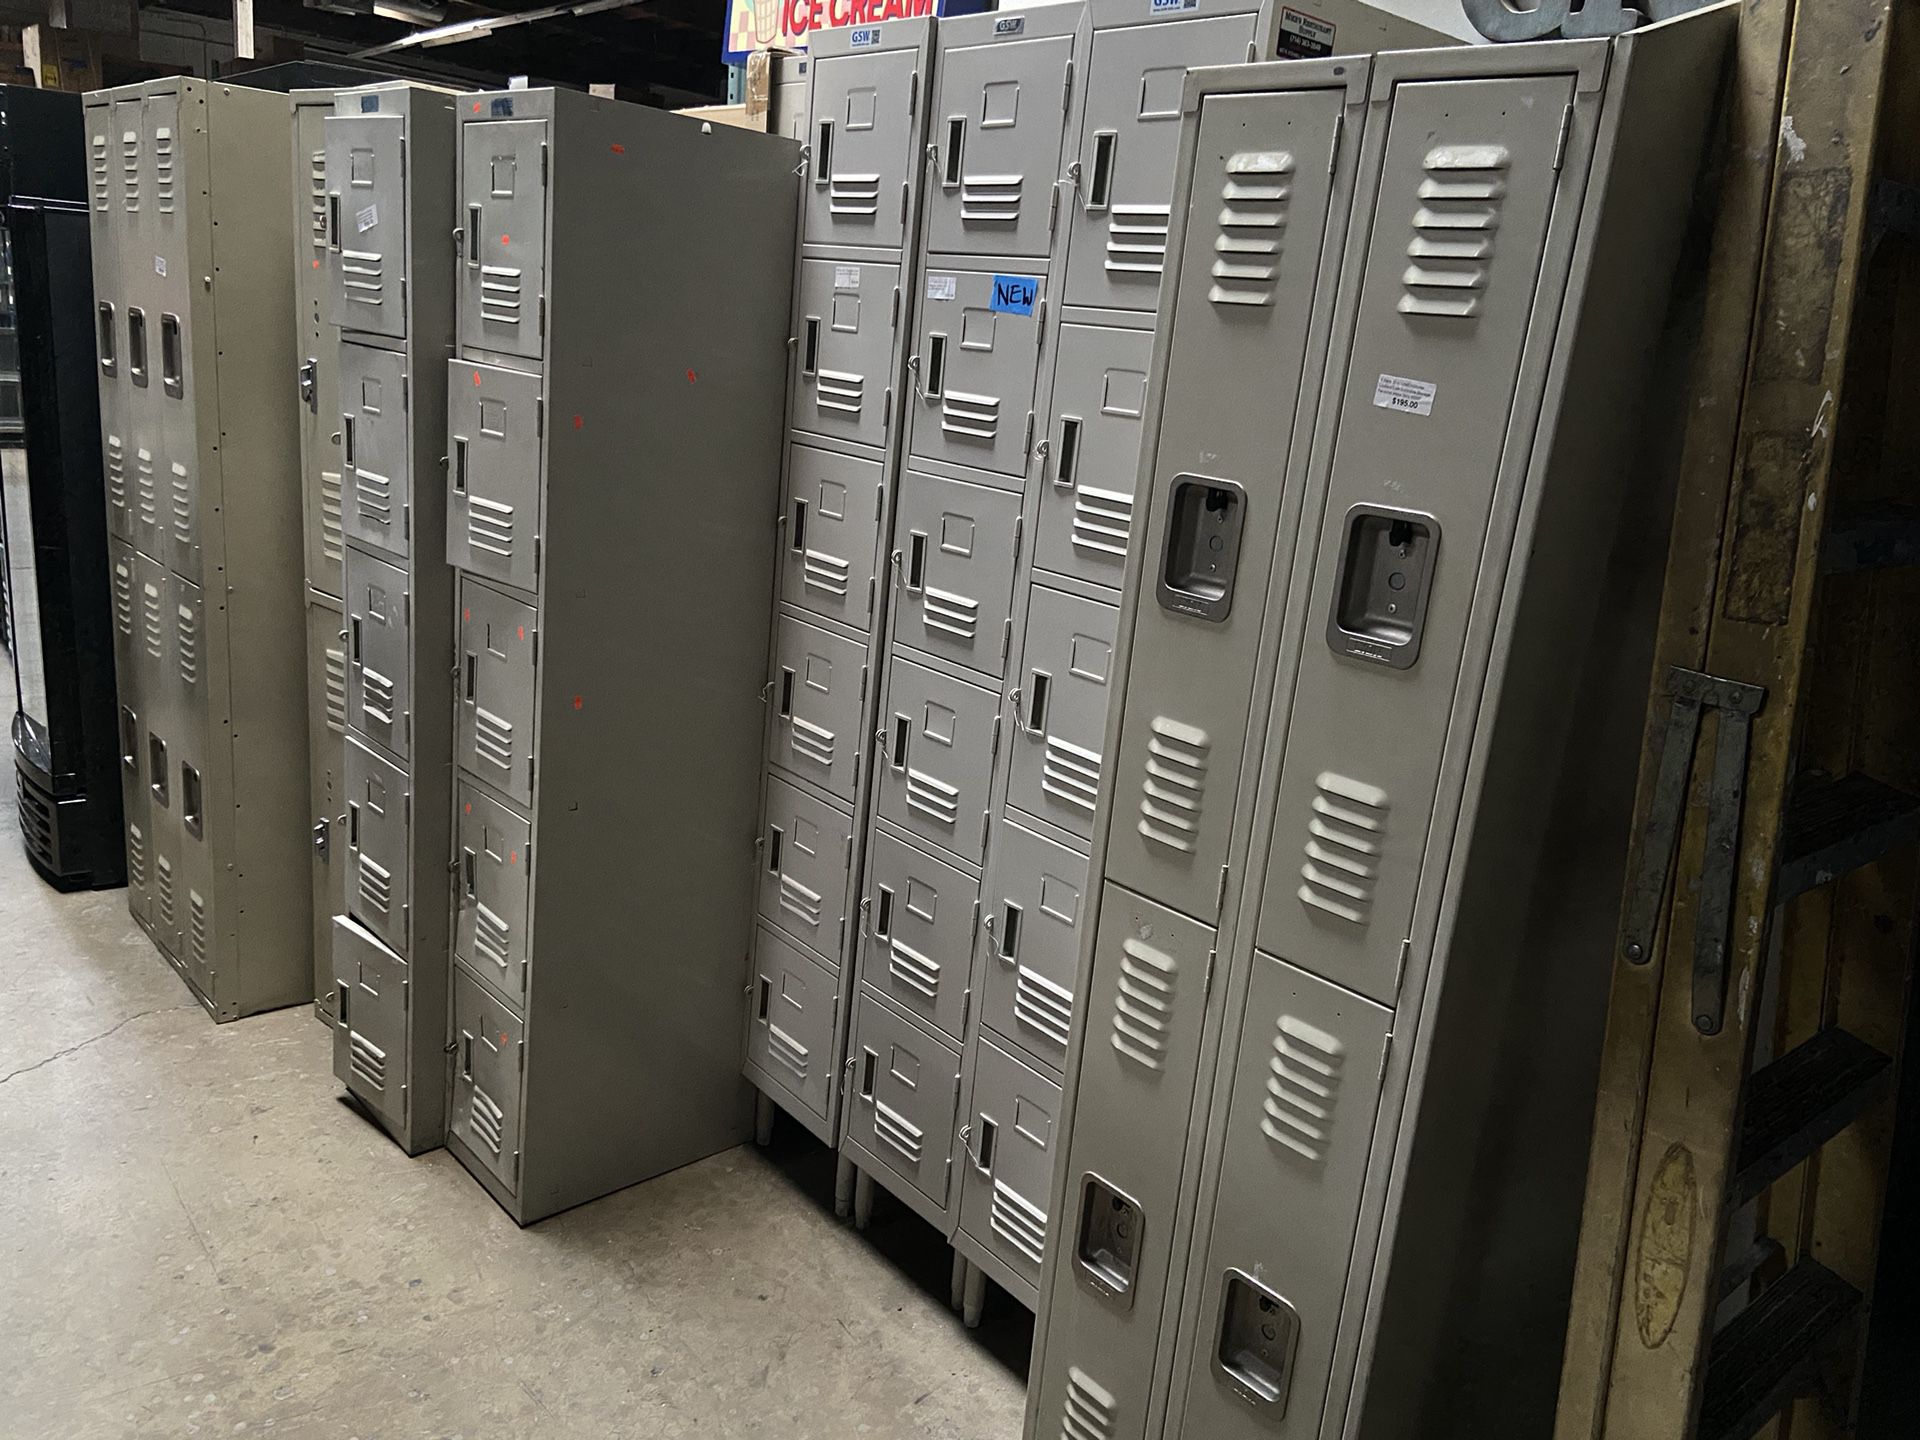 2 4 5 6 8 Slot Employee Lockers Storage Start At $75 Compartment Units Personal Lockable Metal Restaurant Retail Garage Office 